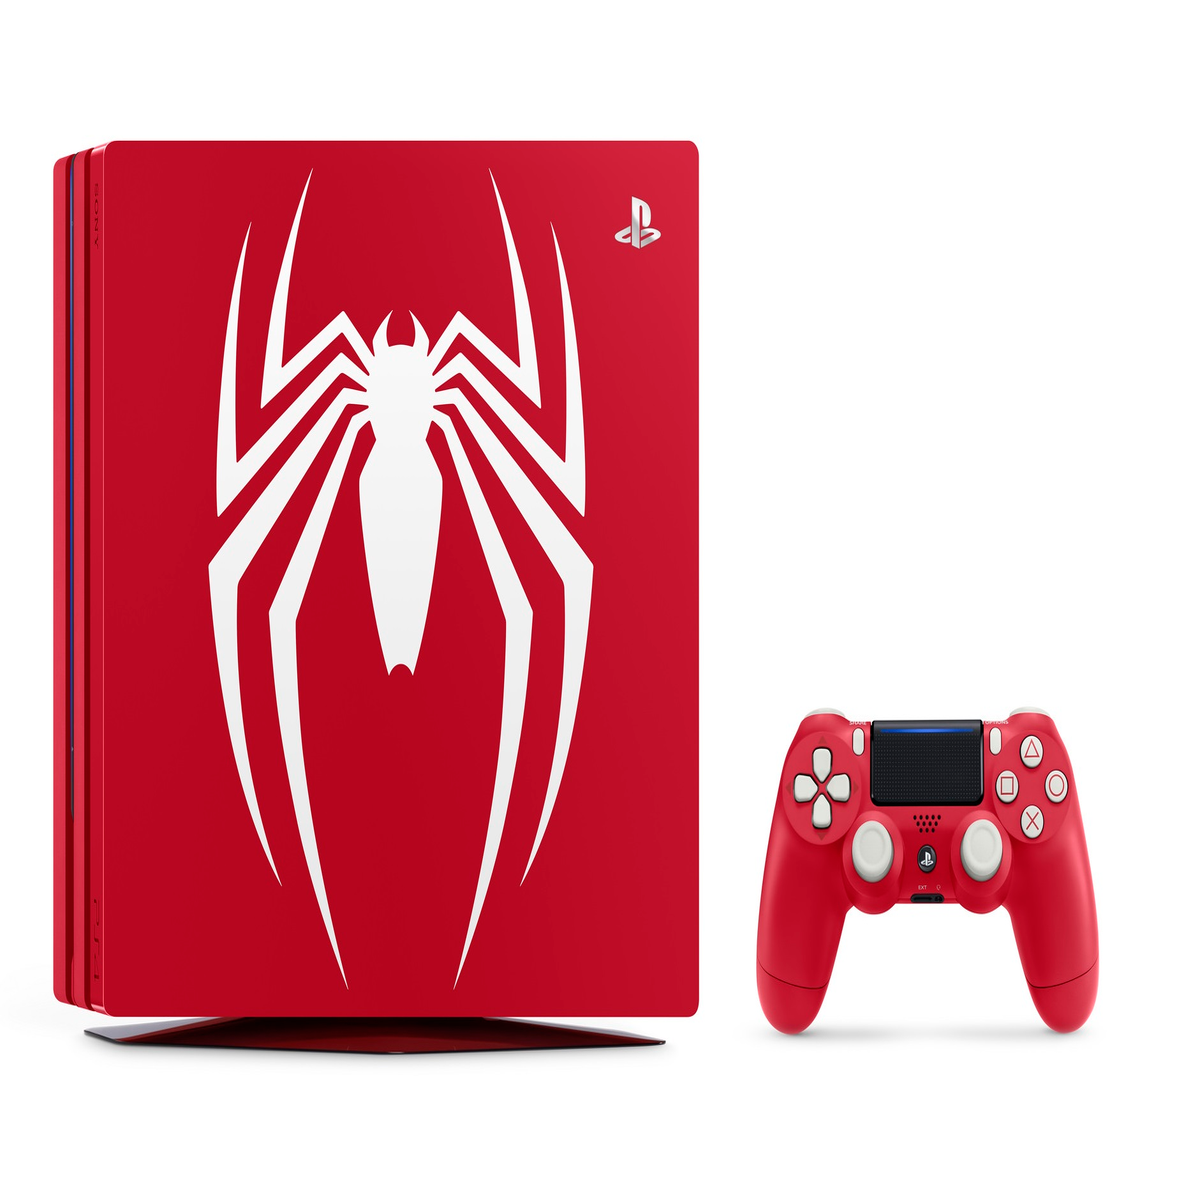 Паук на плейстейшен 4. Ps4 Pro Spider man Edition. Ps4 Pro Spider man Limited Edition. Sony PLAYSTATION 4 Red Limited Edition. Ps4 Slim.